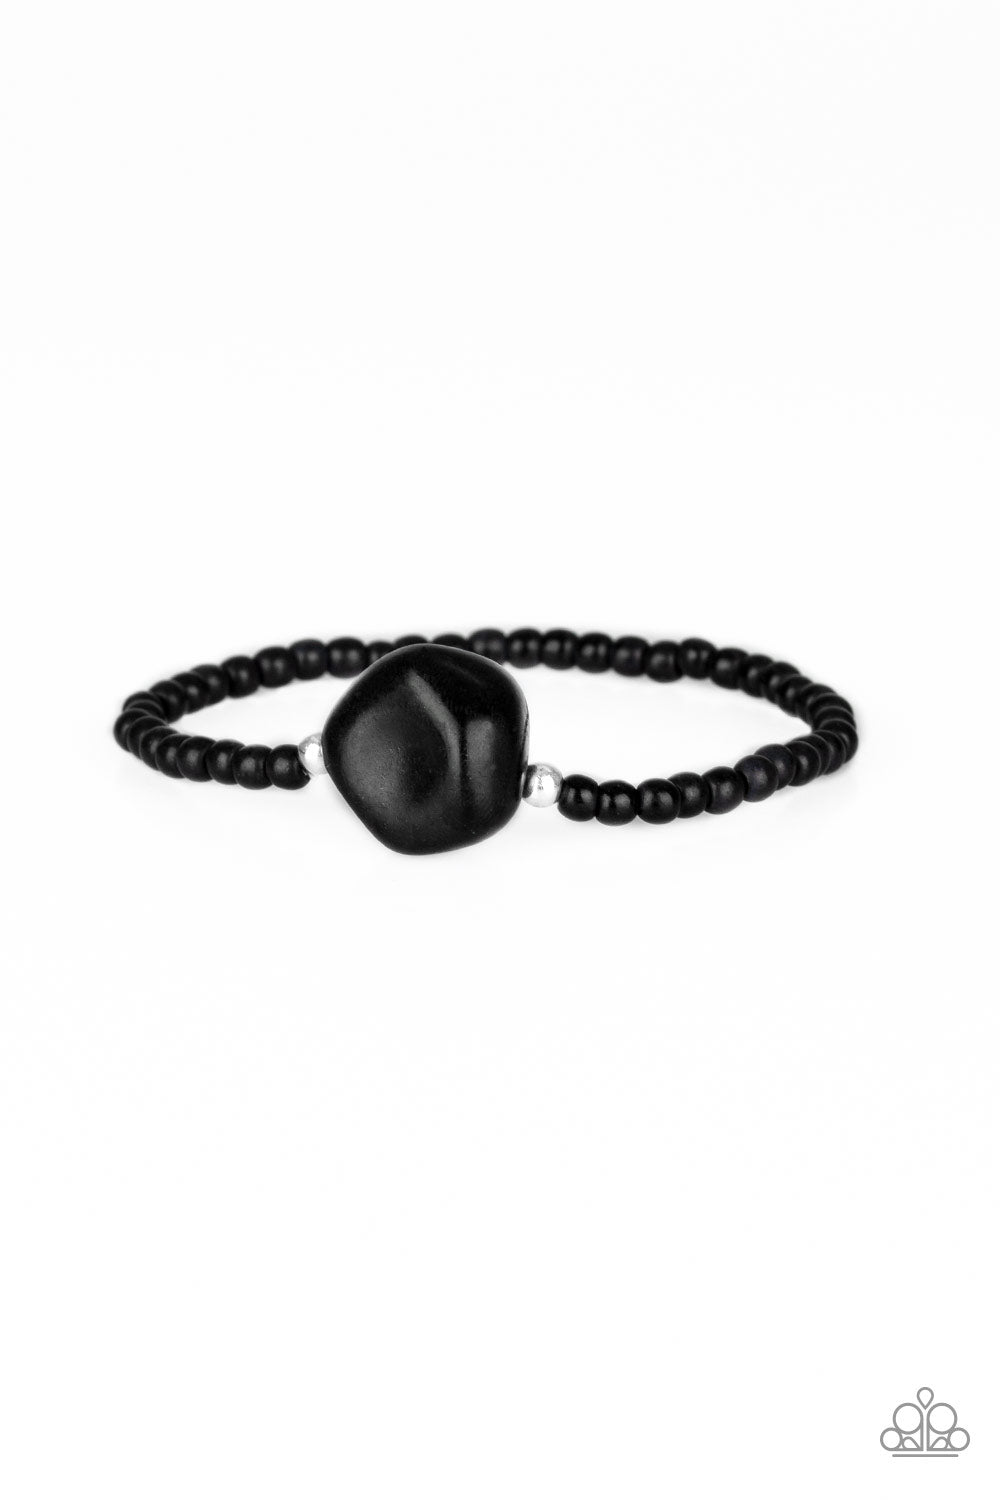 Eco Eccentricity Black Urban Bracelet - Paparazzi Accessories